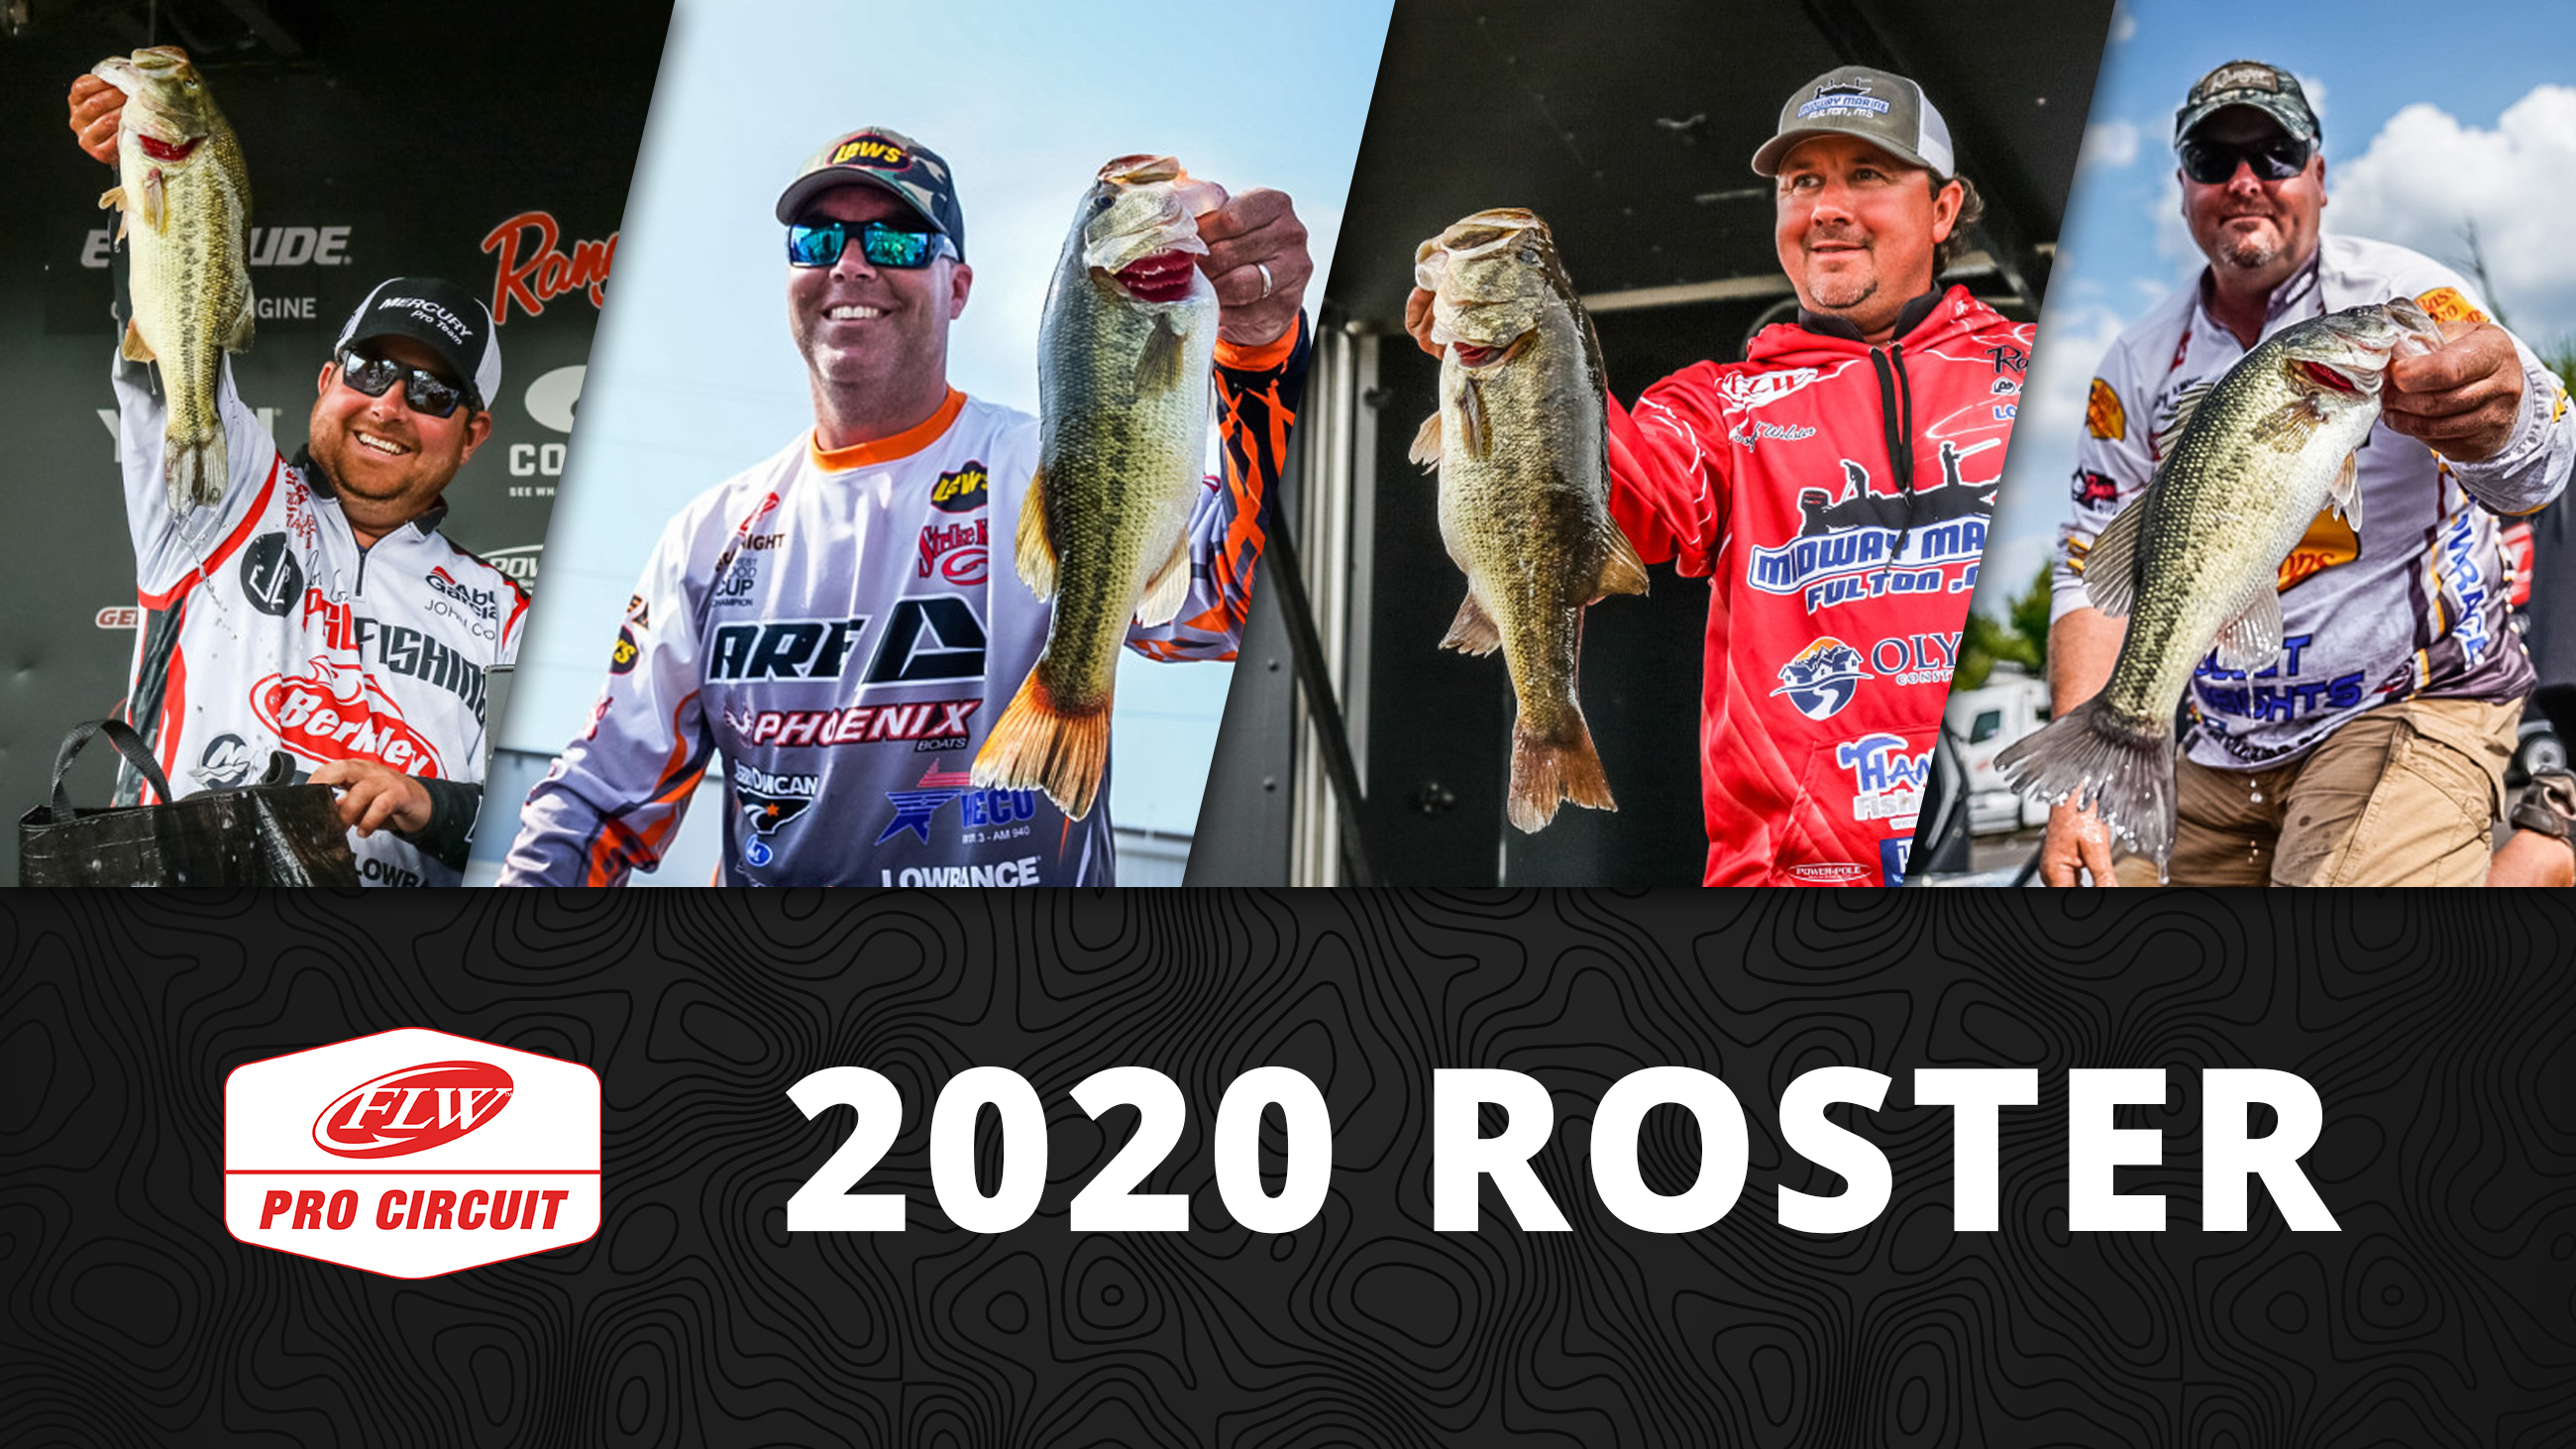 FLW Announces 2020 FLW Pro Circuit Roster - Major League Fishing